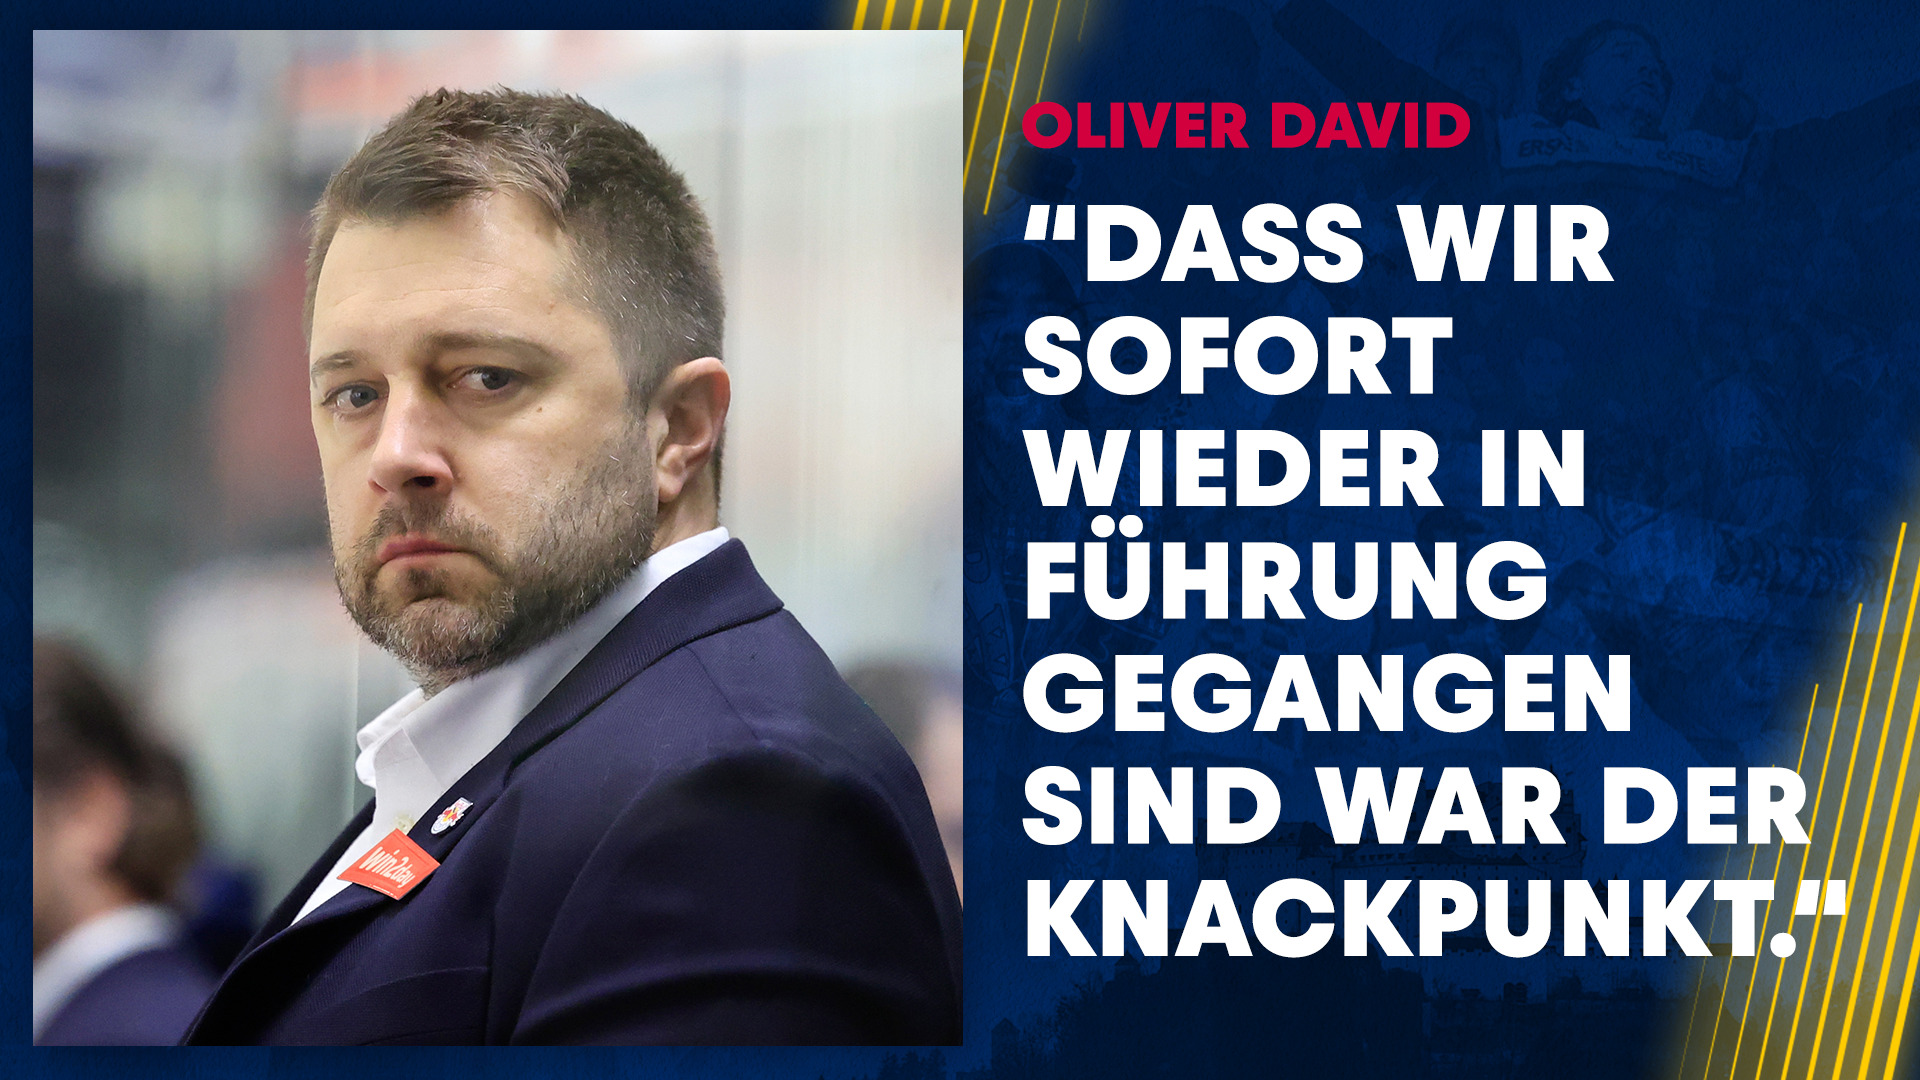 Statement: Oliver David